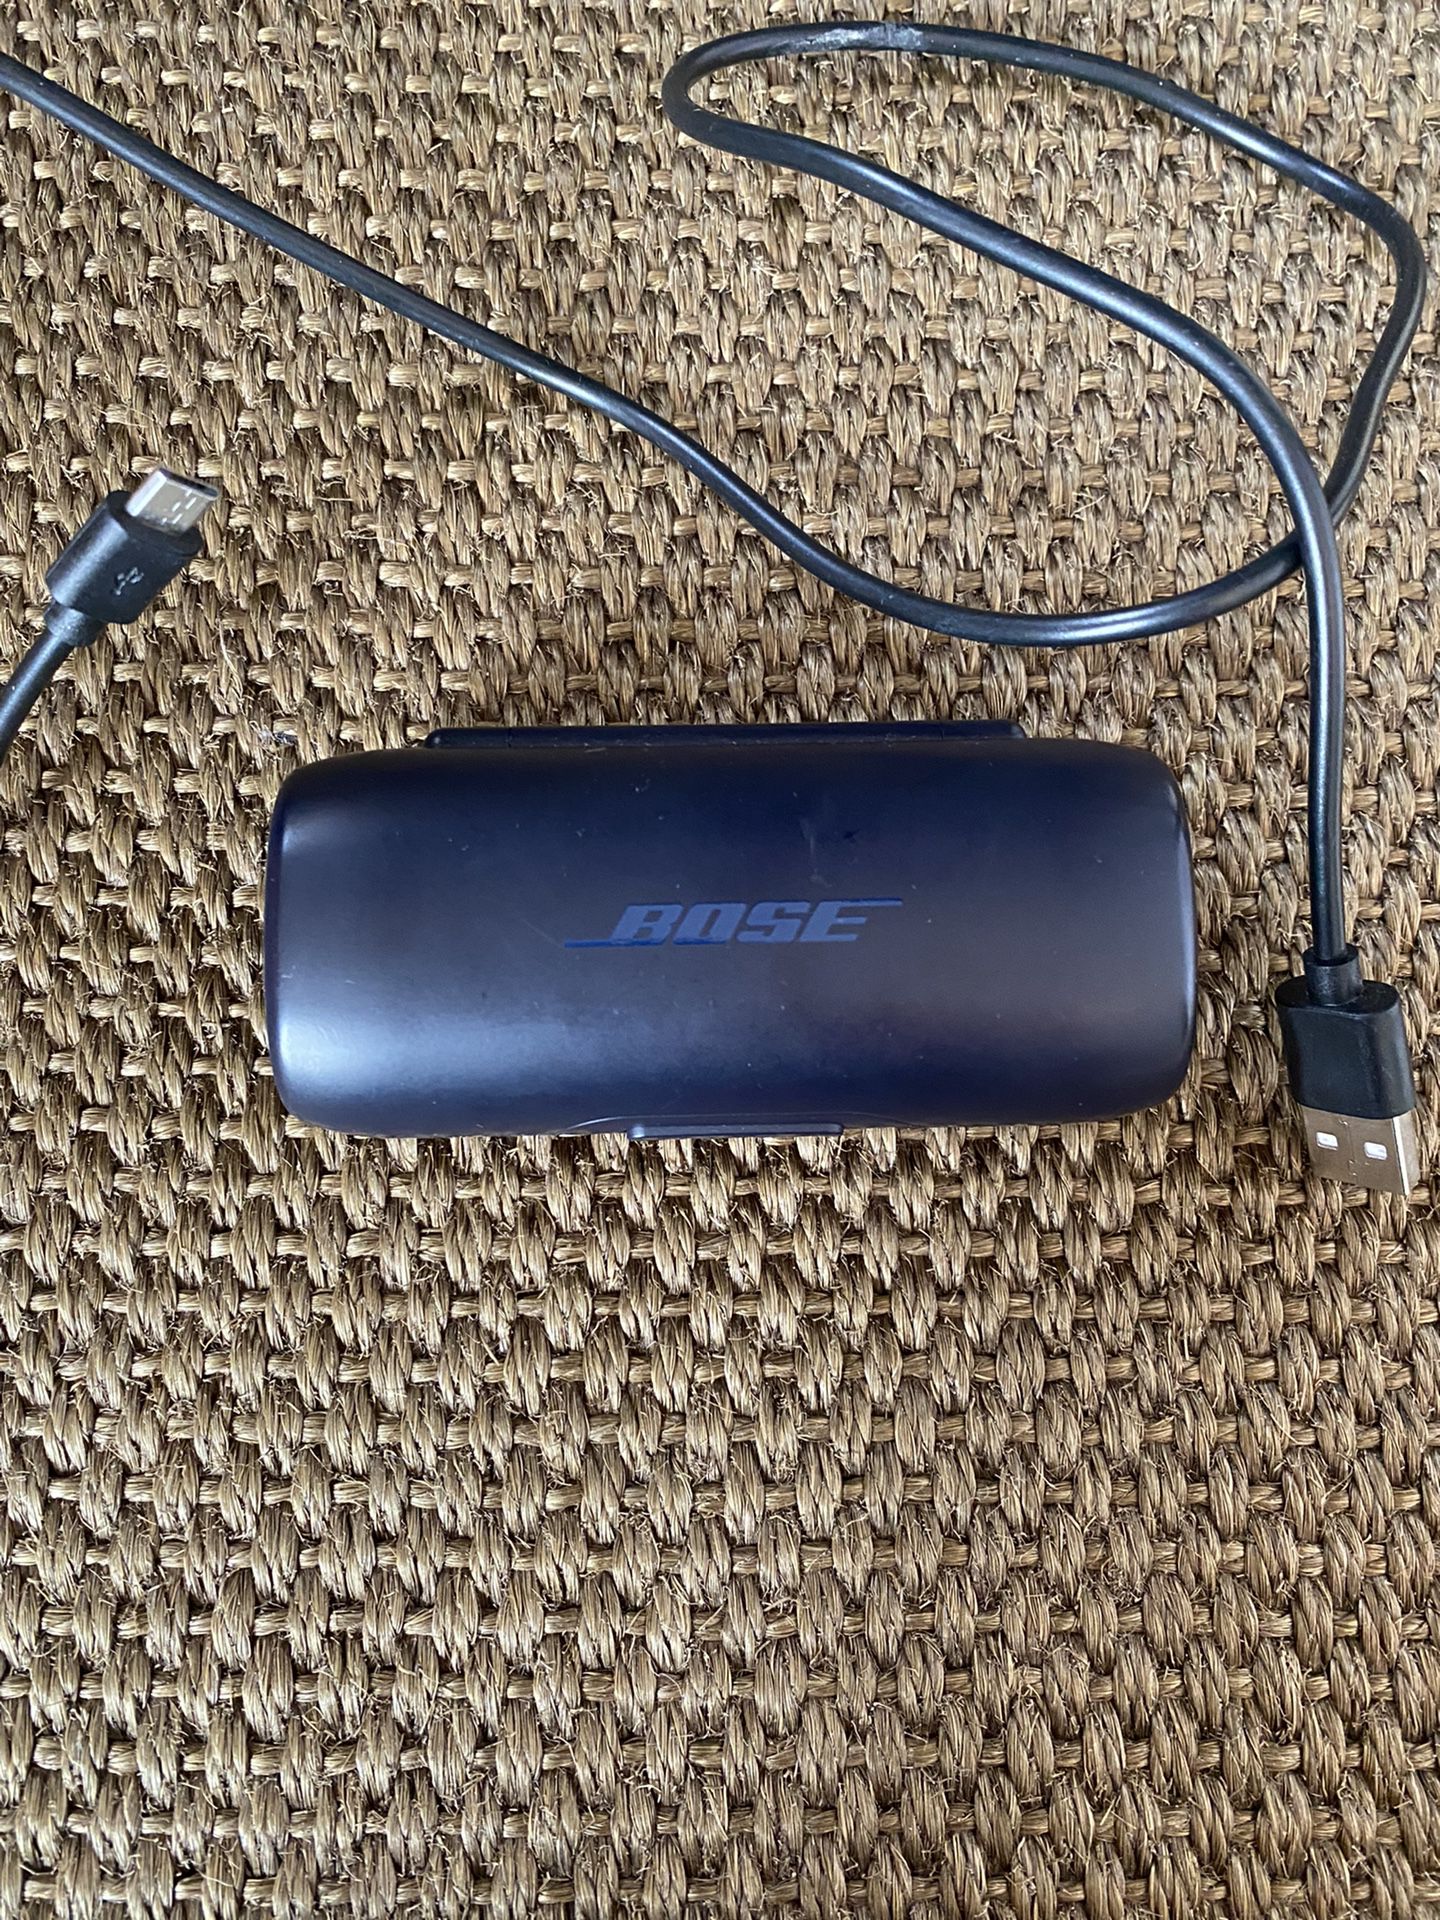 Bose wireless Head Phones